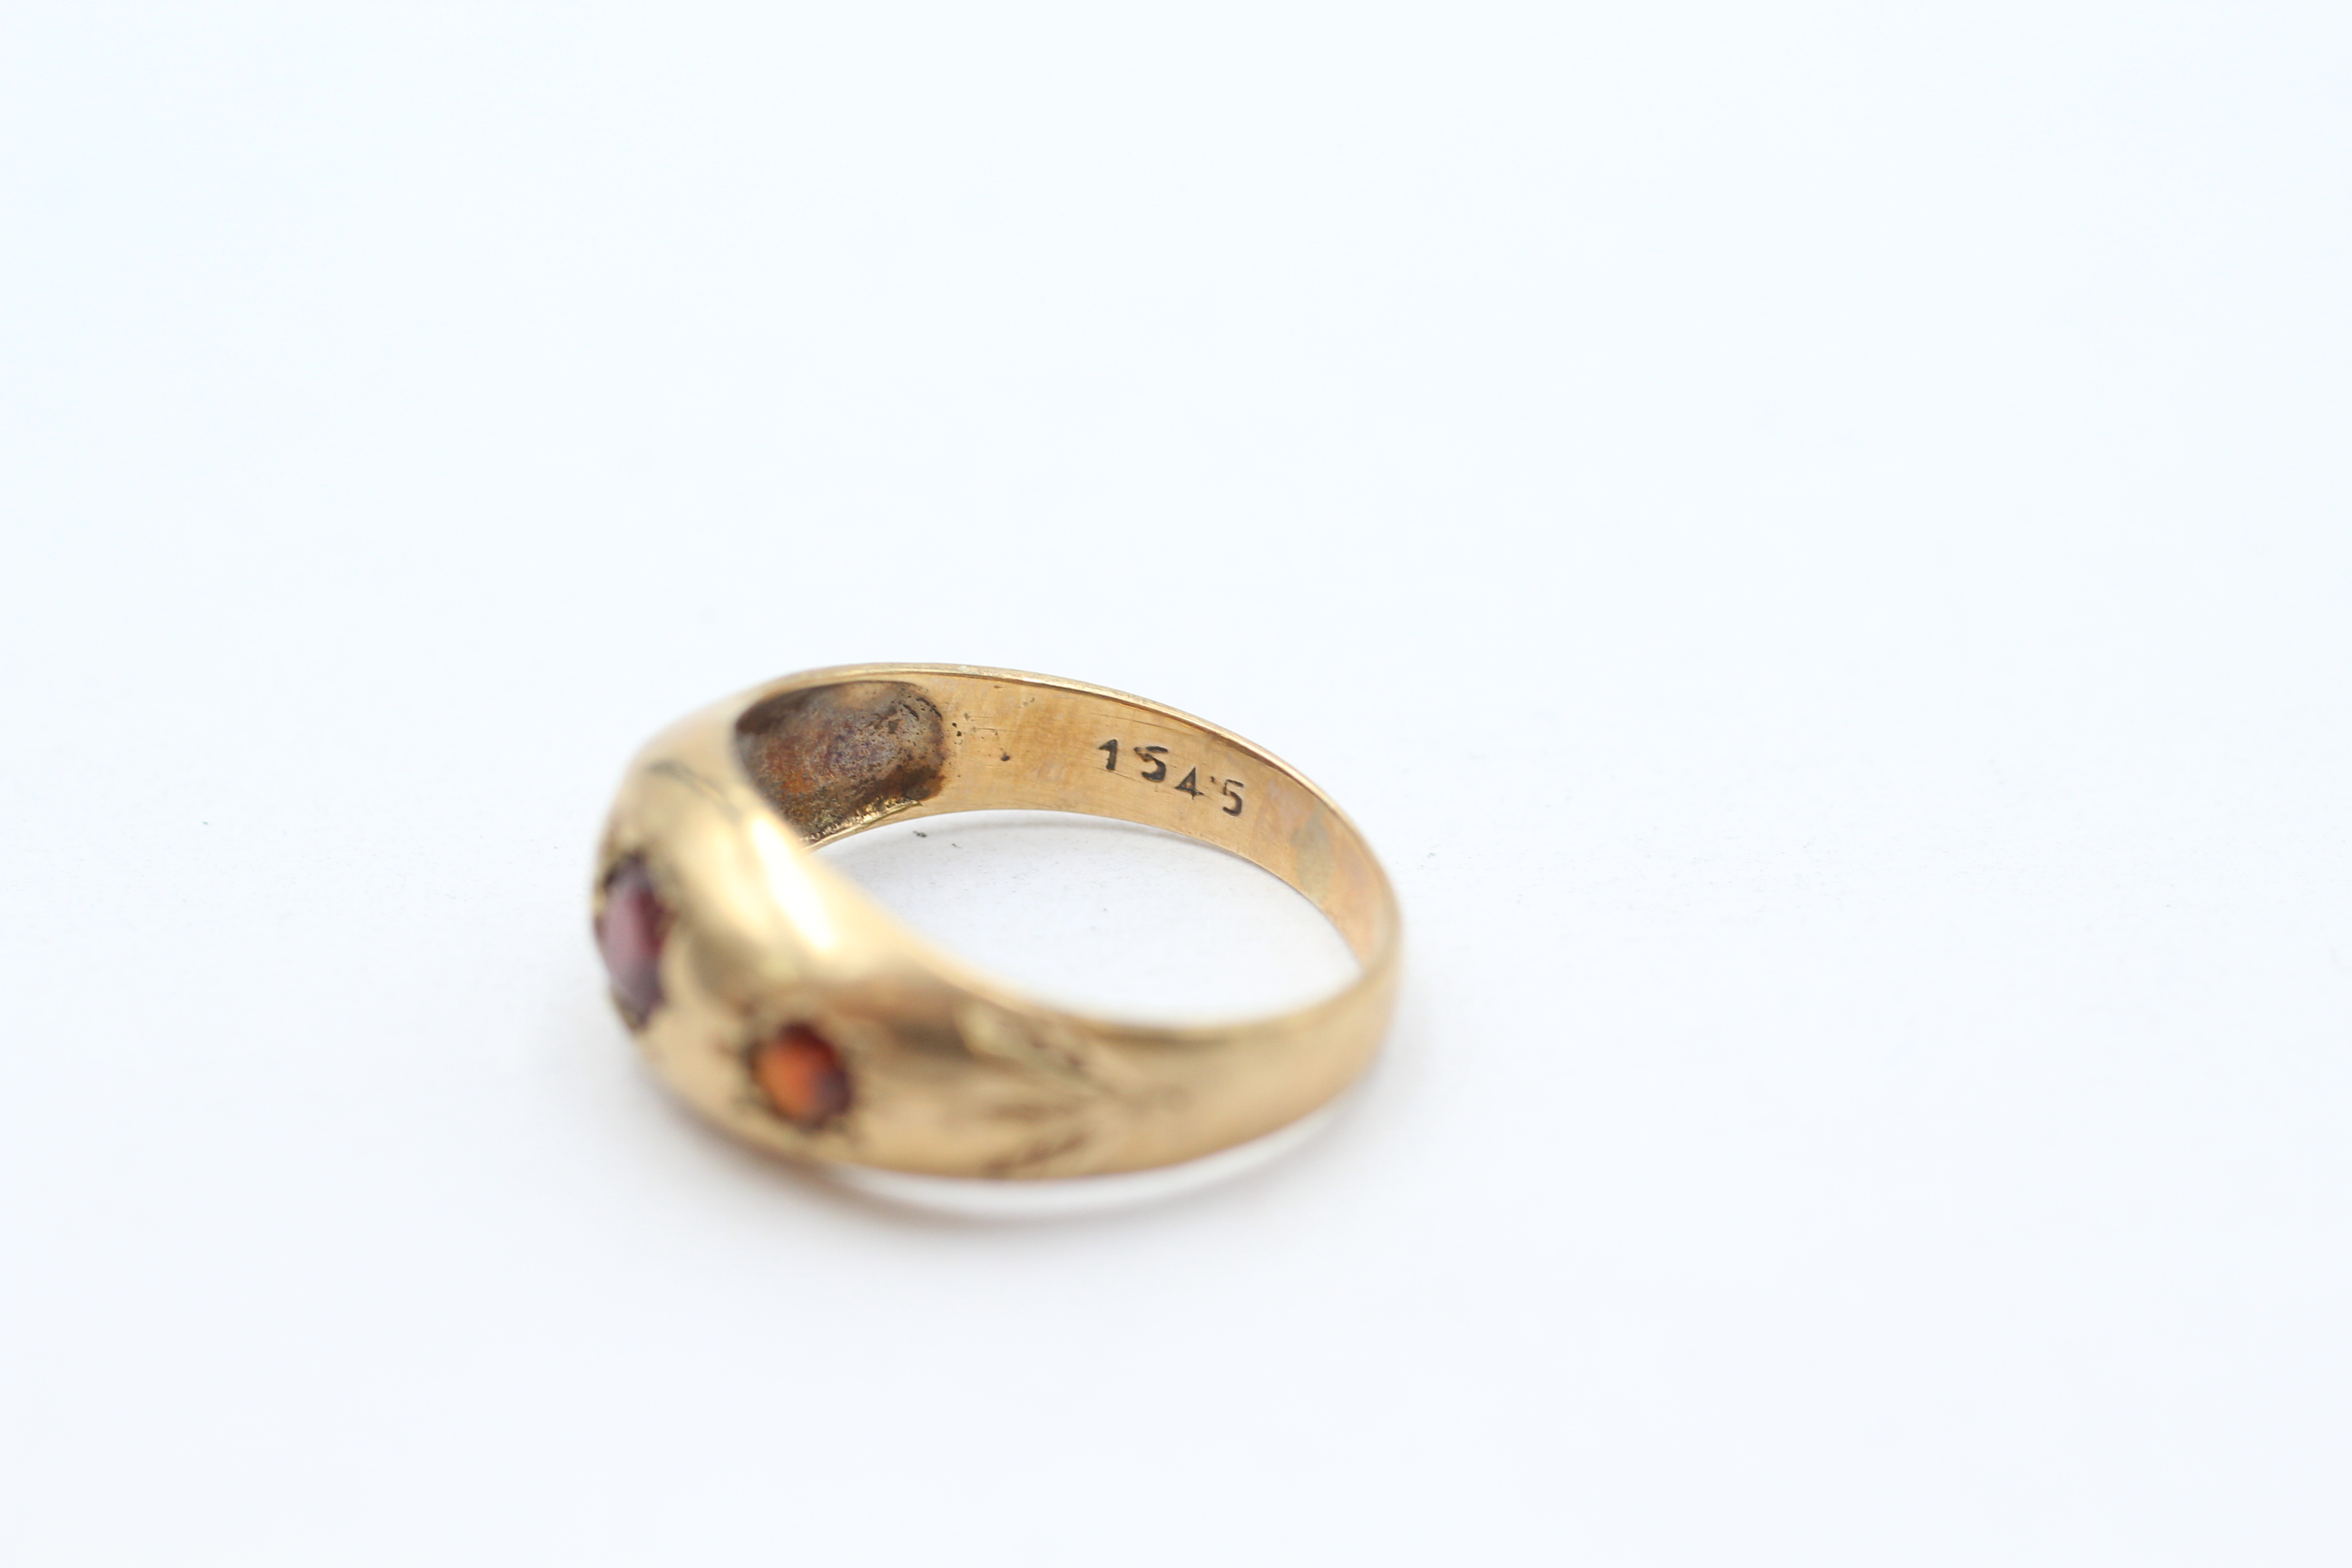 9ct gold antique garnet three stone ring with starburst motif Size M - 2.5 g - Image 5 of 5